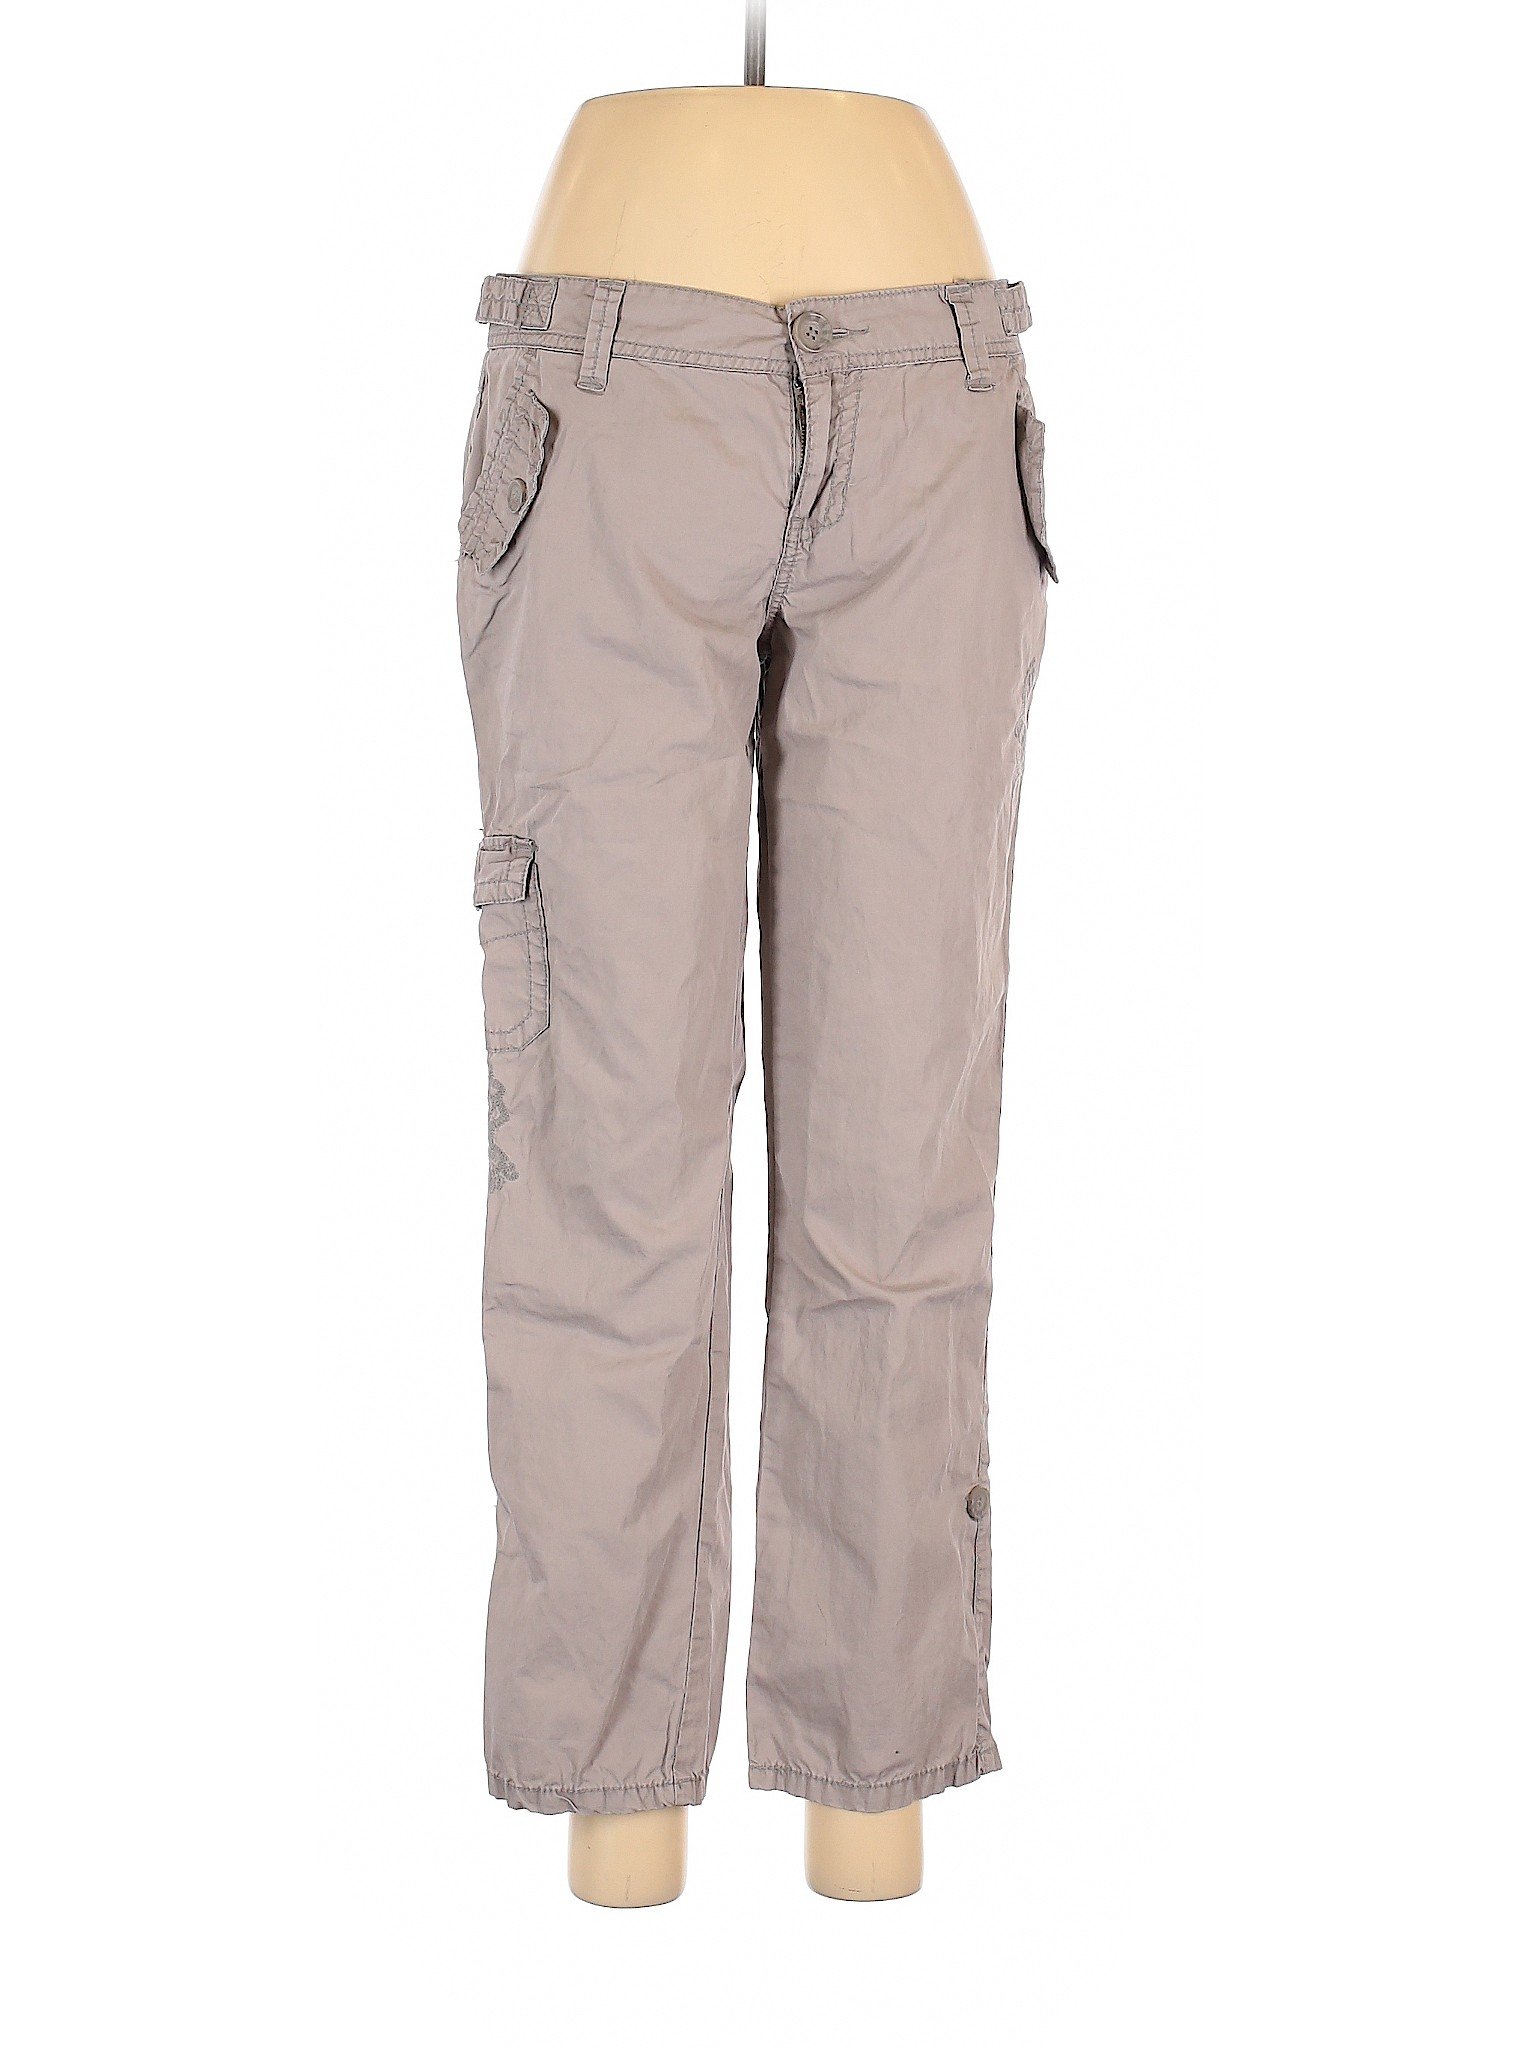 Aeropostale 100% Cotton Gray Cargo Pants Size 9 - 10 - 70% off | thredUP